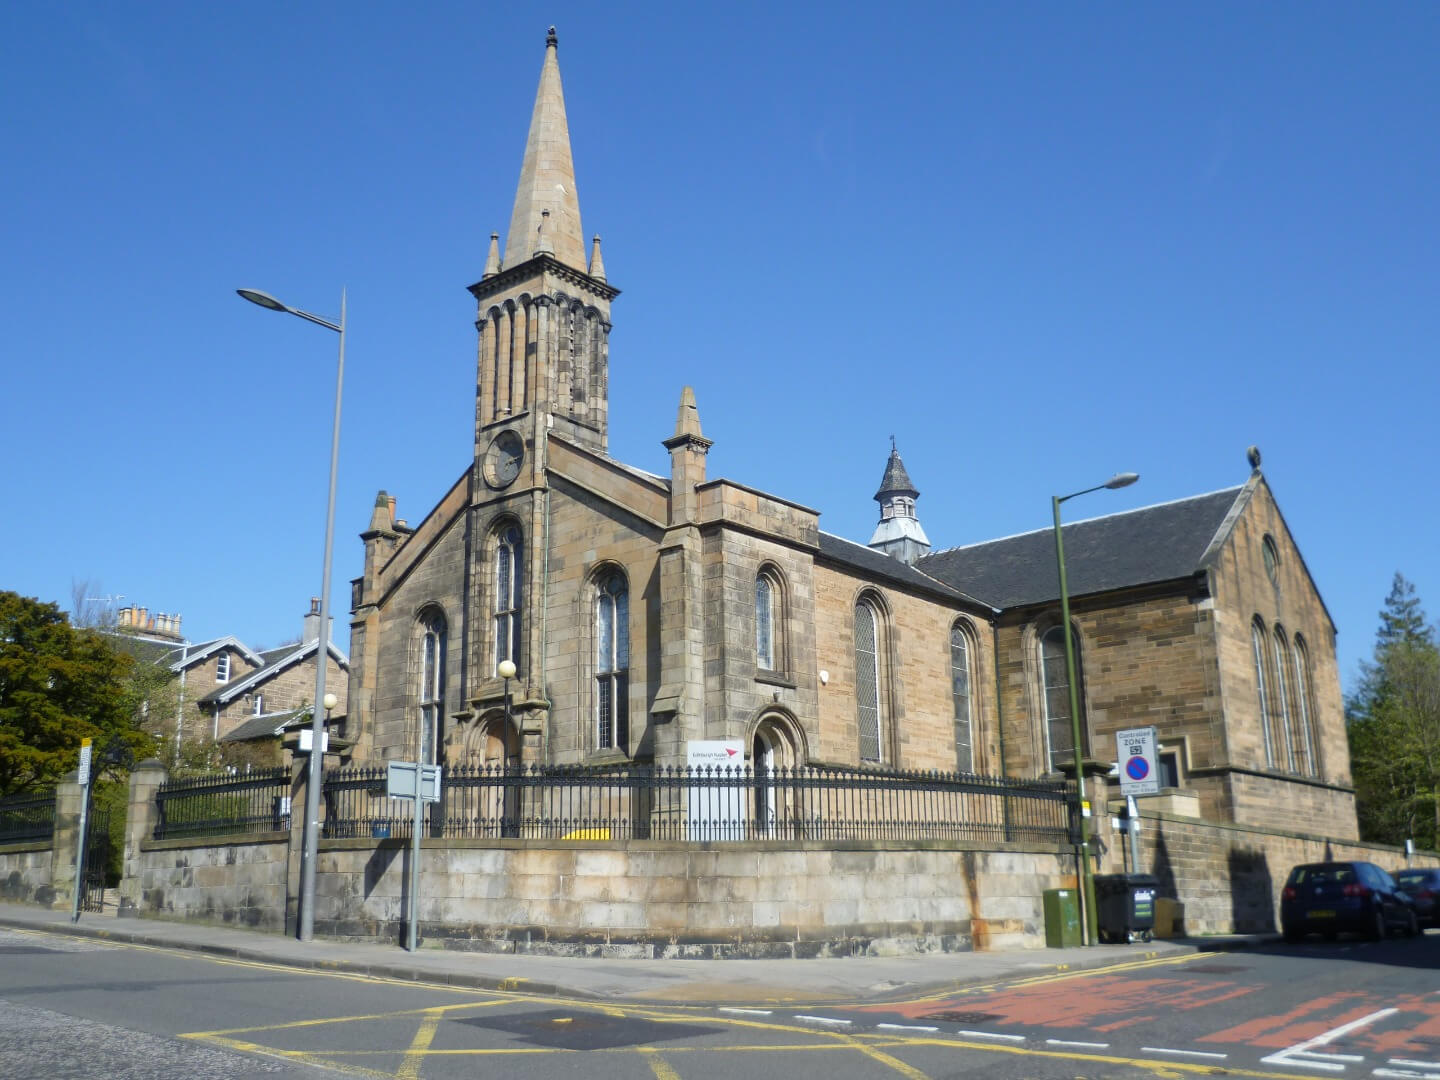 Student Accommodation in Morningside, Edinburgh - former Morningside Parish church